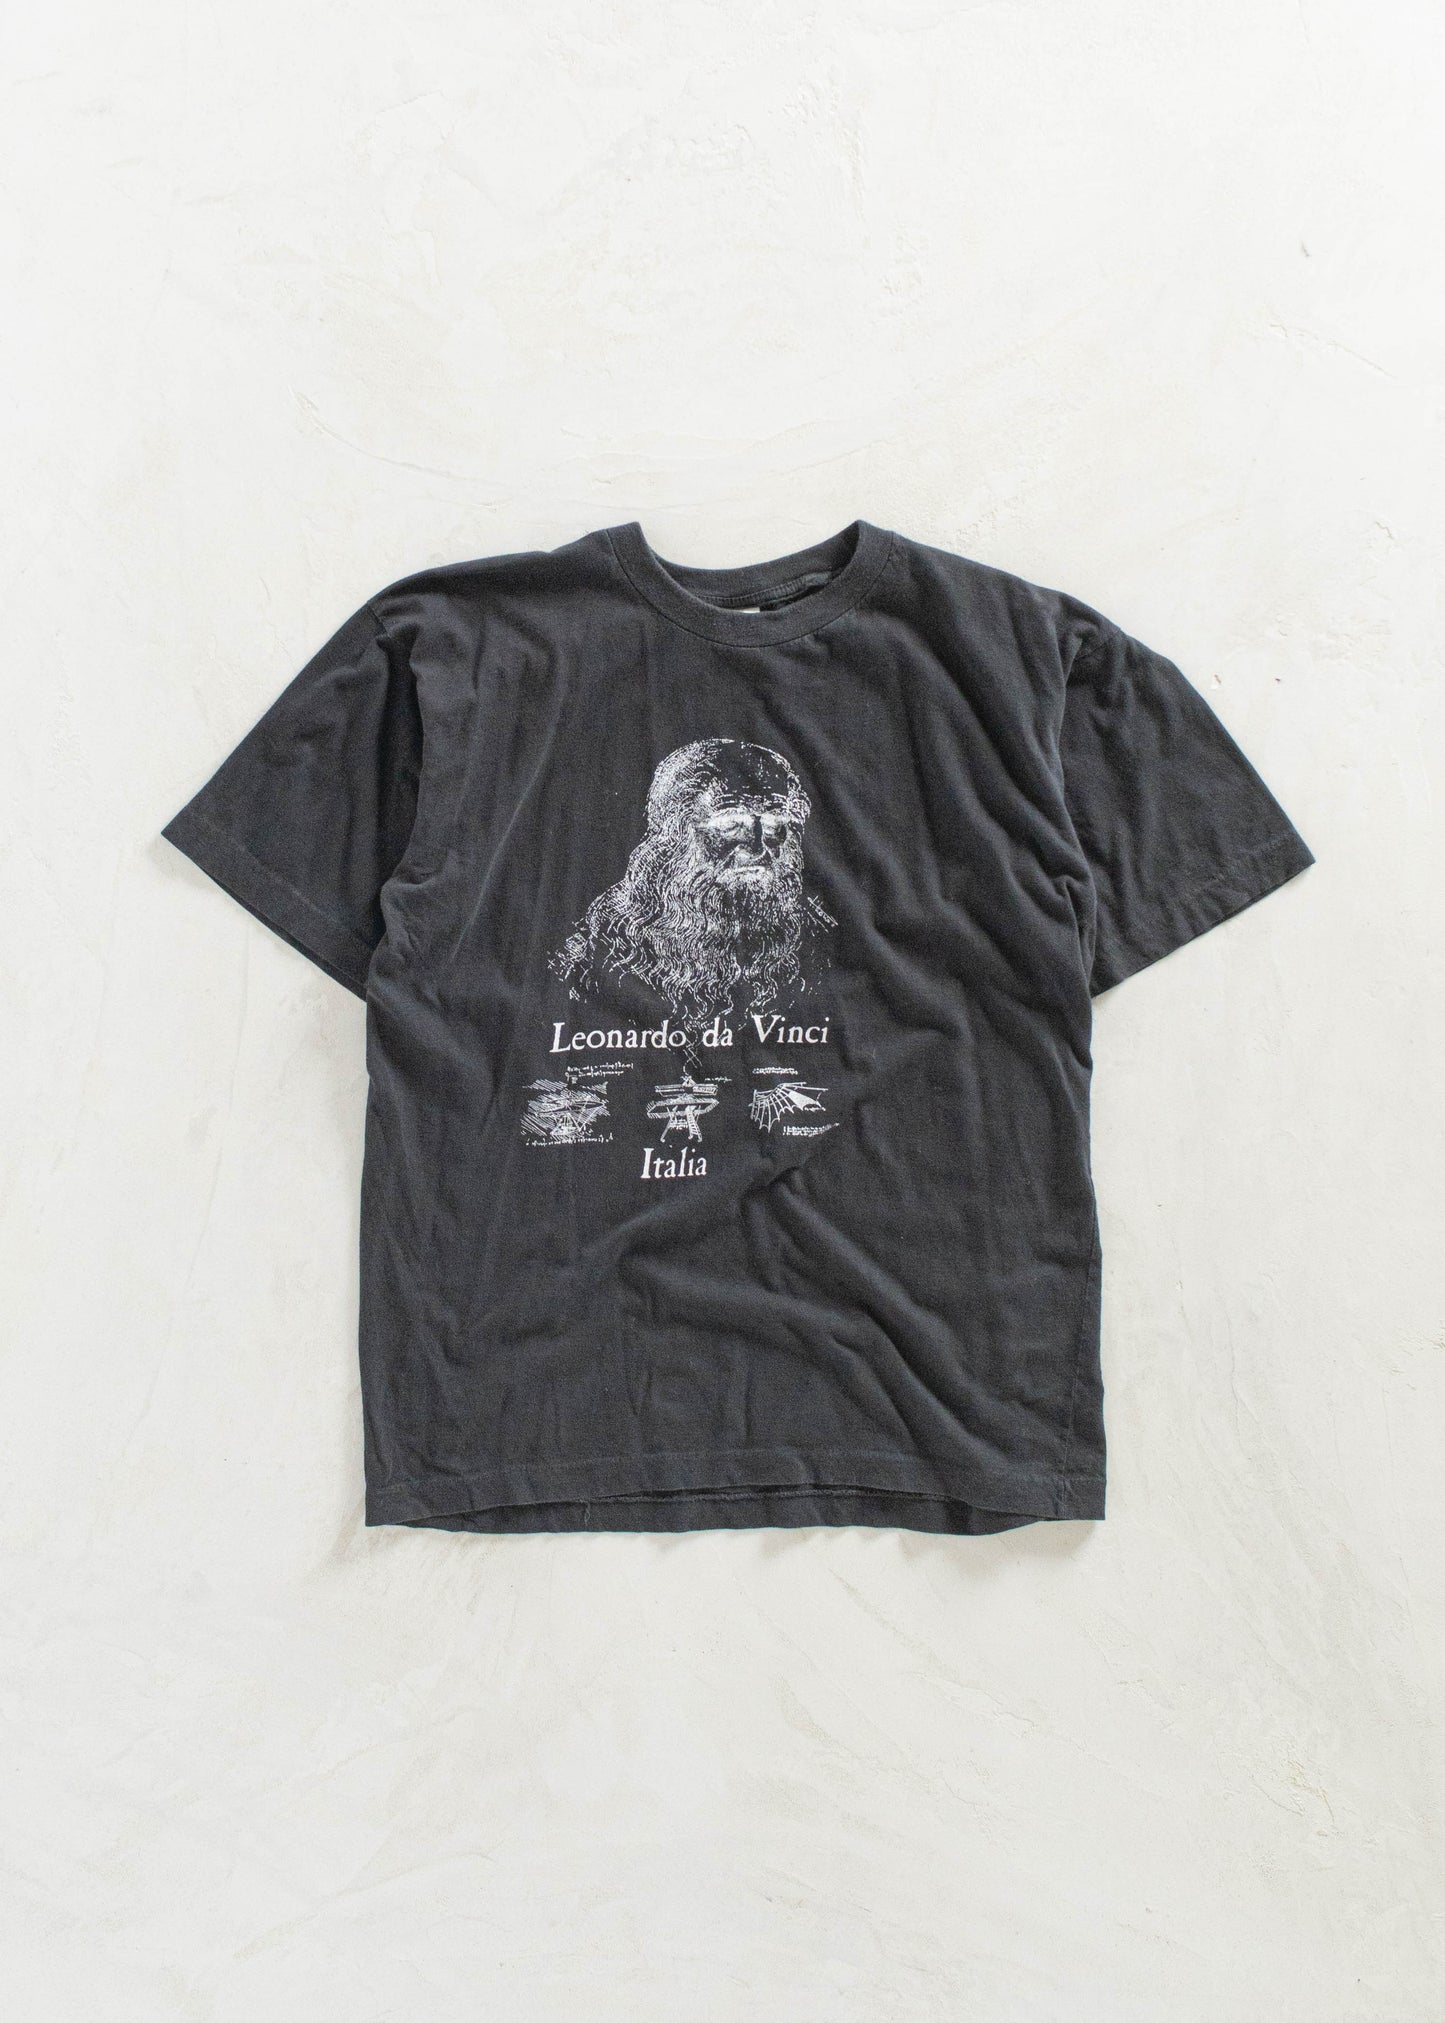 Leonardo Da Vinci T-Shirt Size M/L